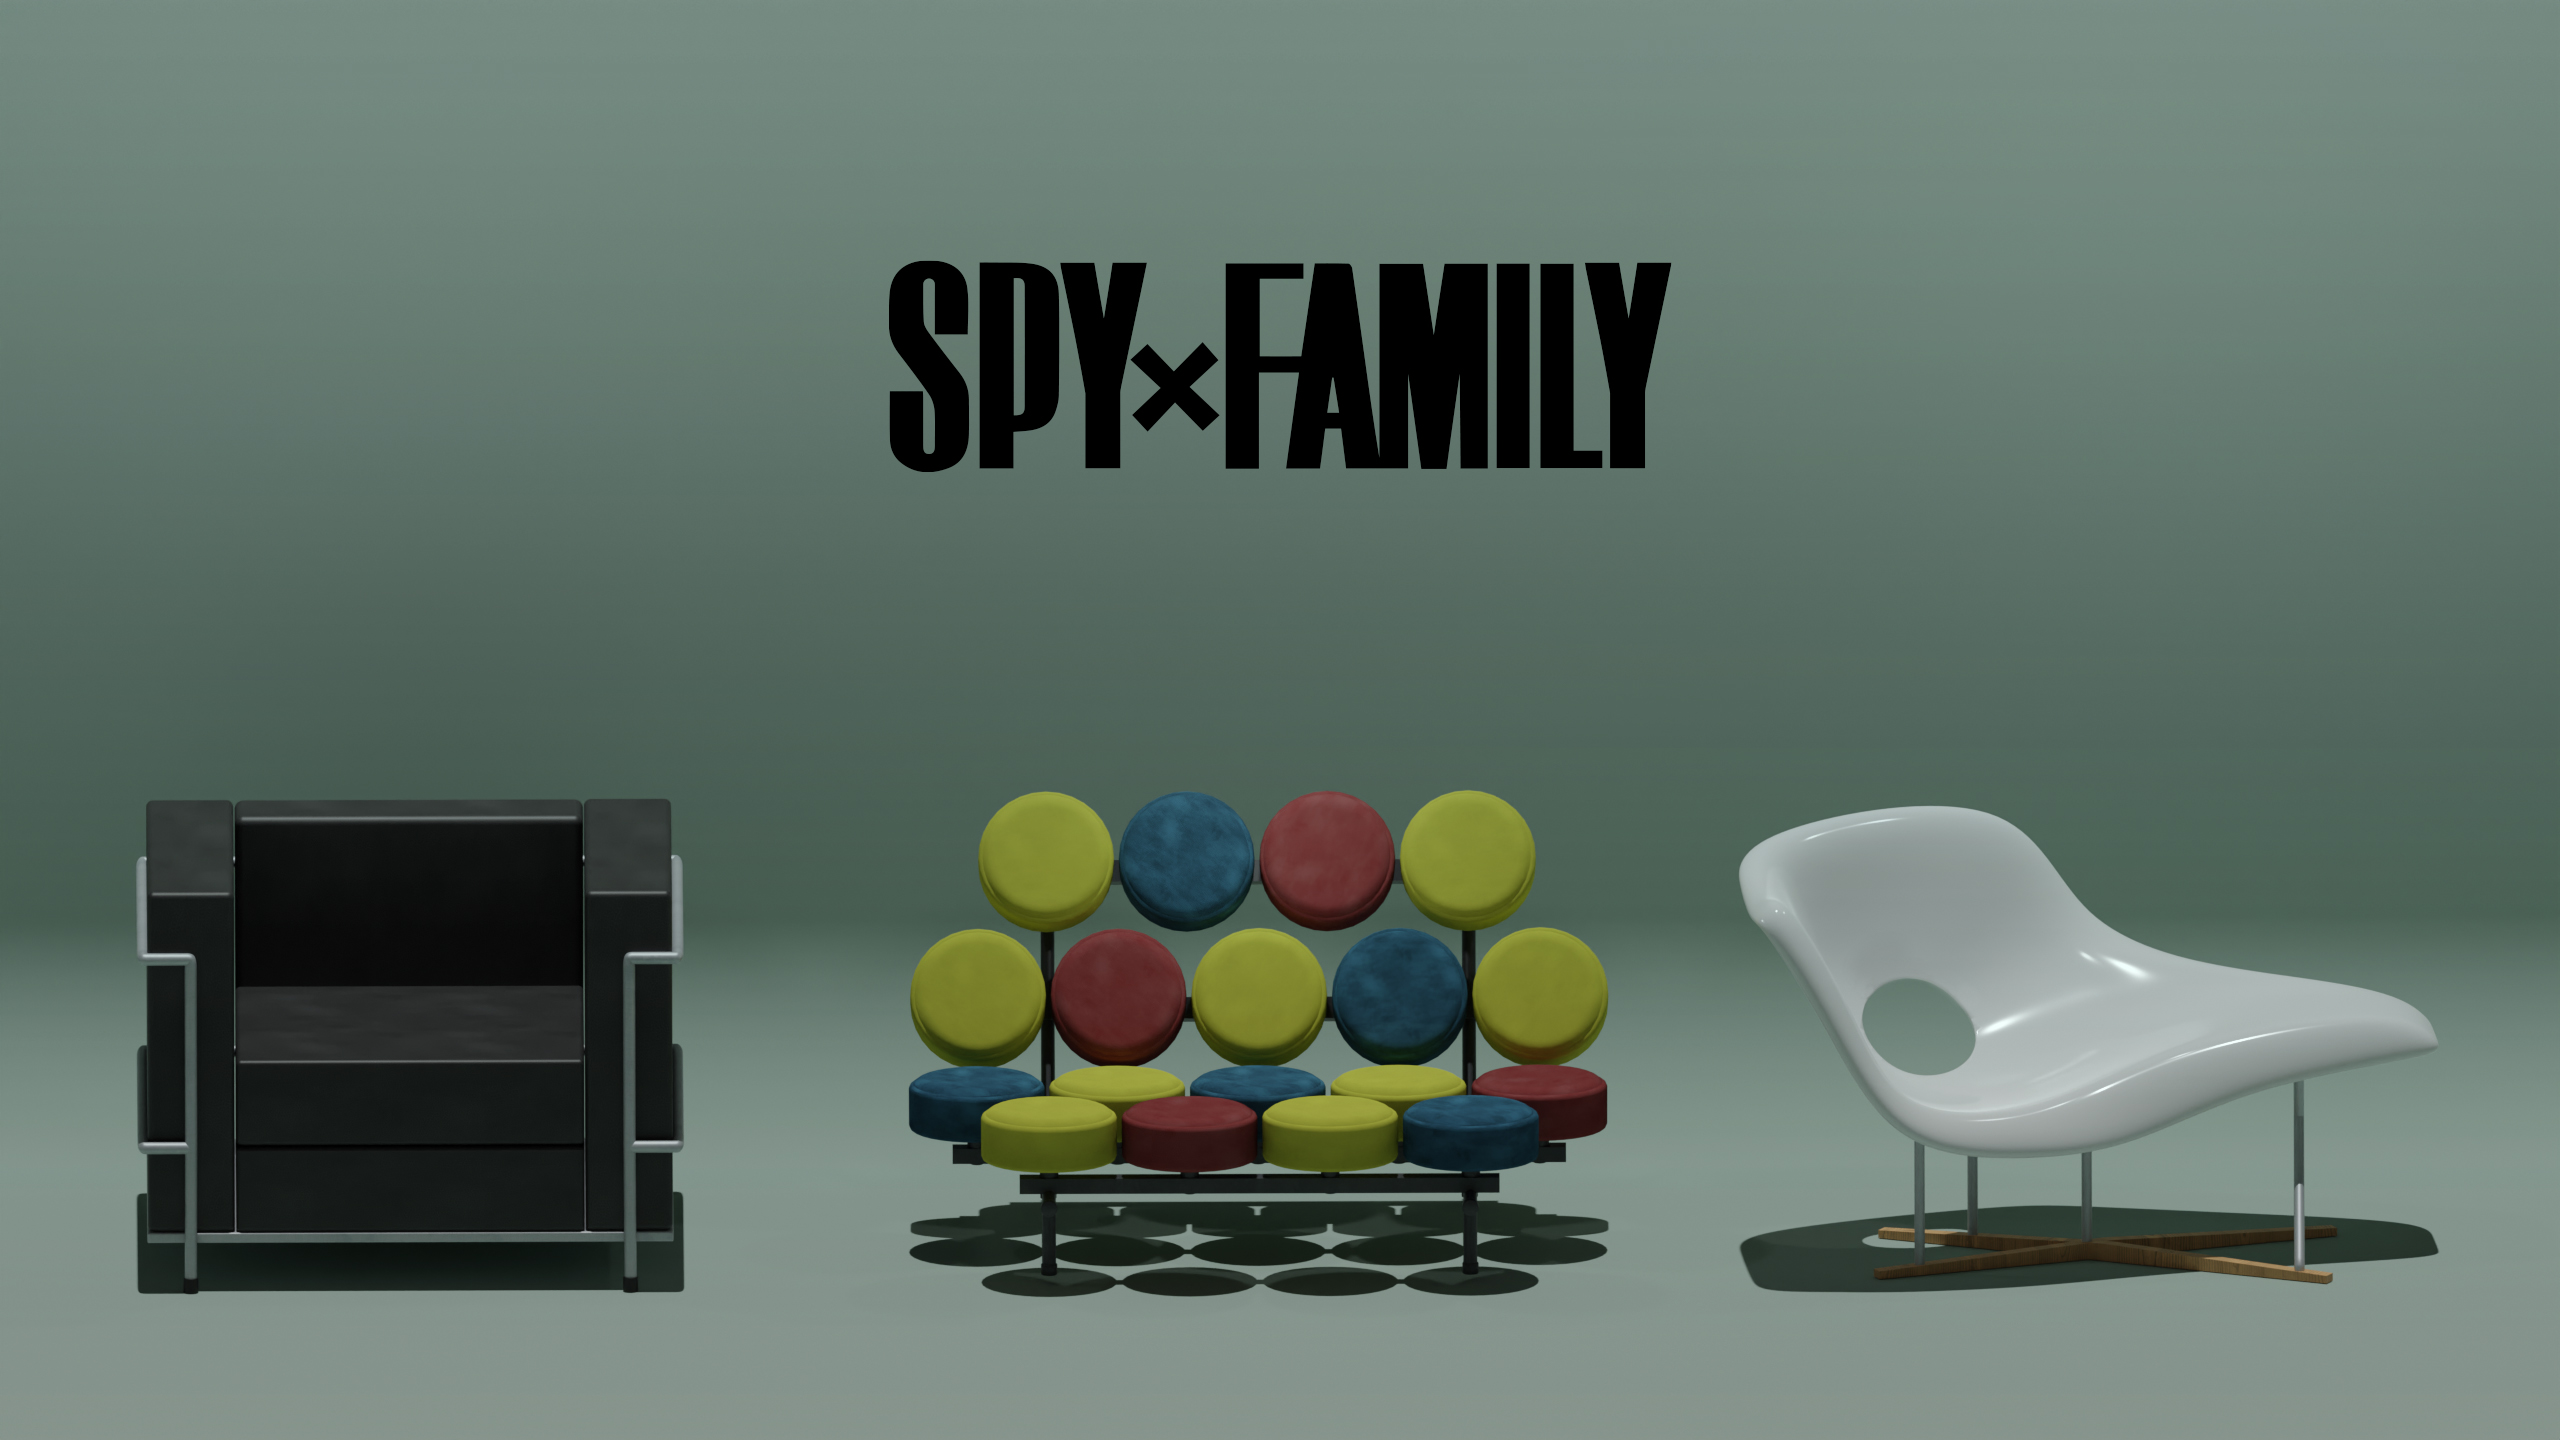 General 2560x1440 Spy x Family Blender typography digital art simple background